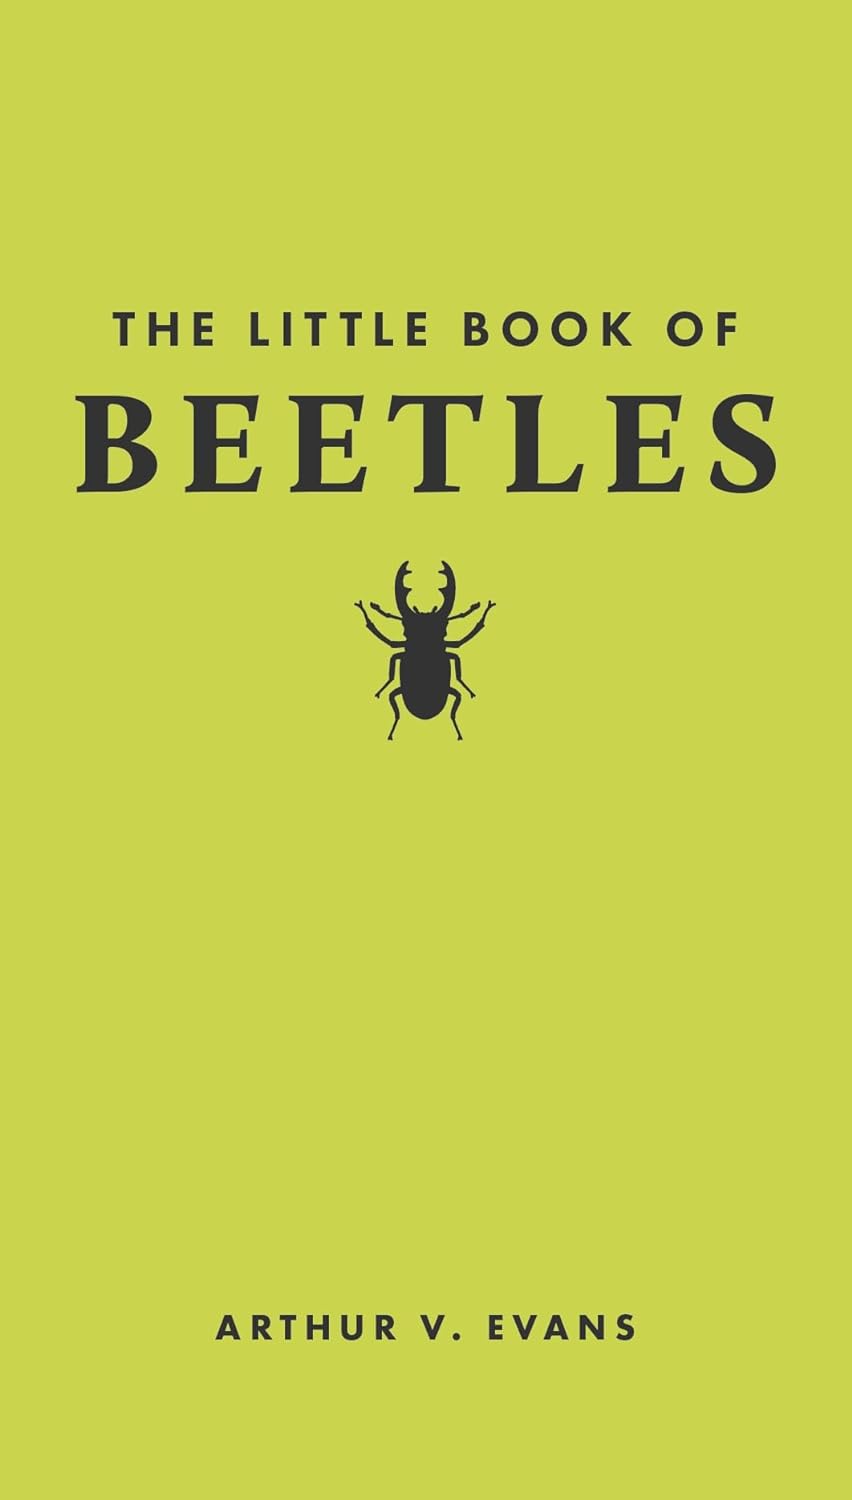 Princeton University Press’ “The Little Book of Beetles” by Arthur V. Evans